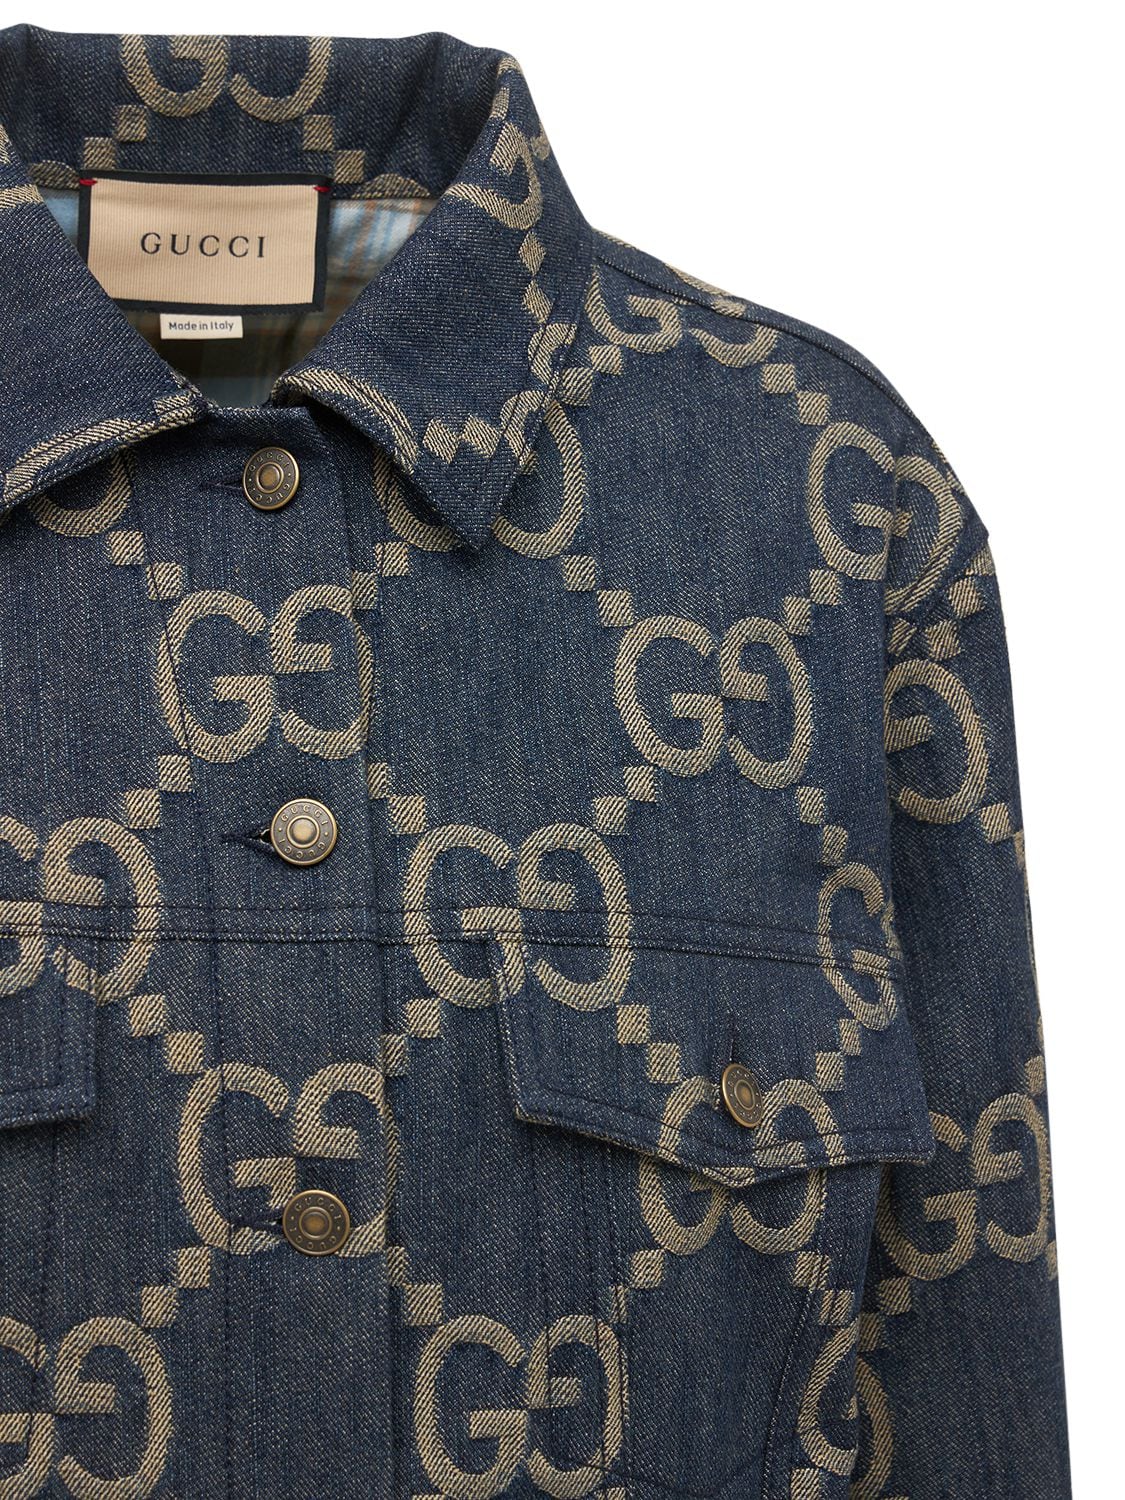 GG Reversible Denim Jacket in Blue - Gucci